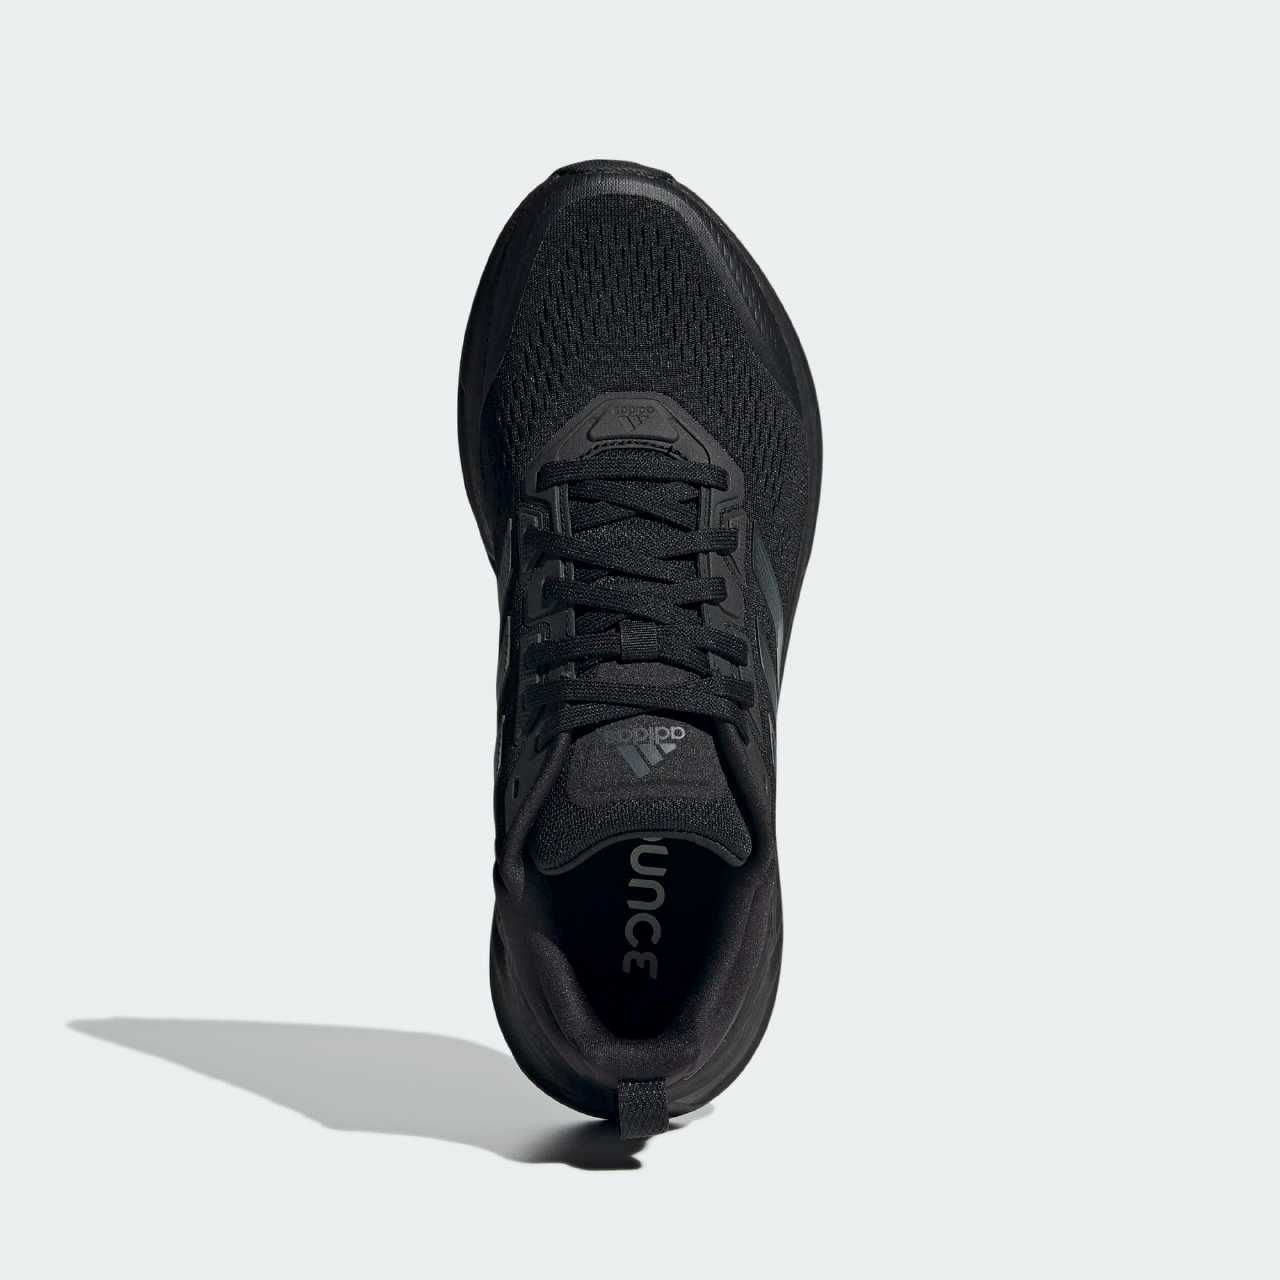 Questar Running Shoes Adidas (оригинал США).